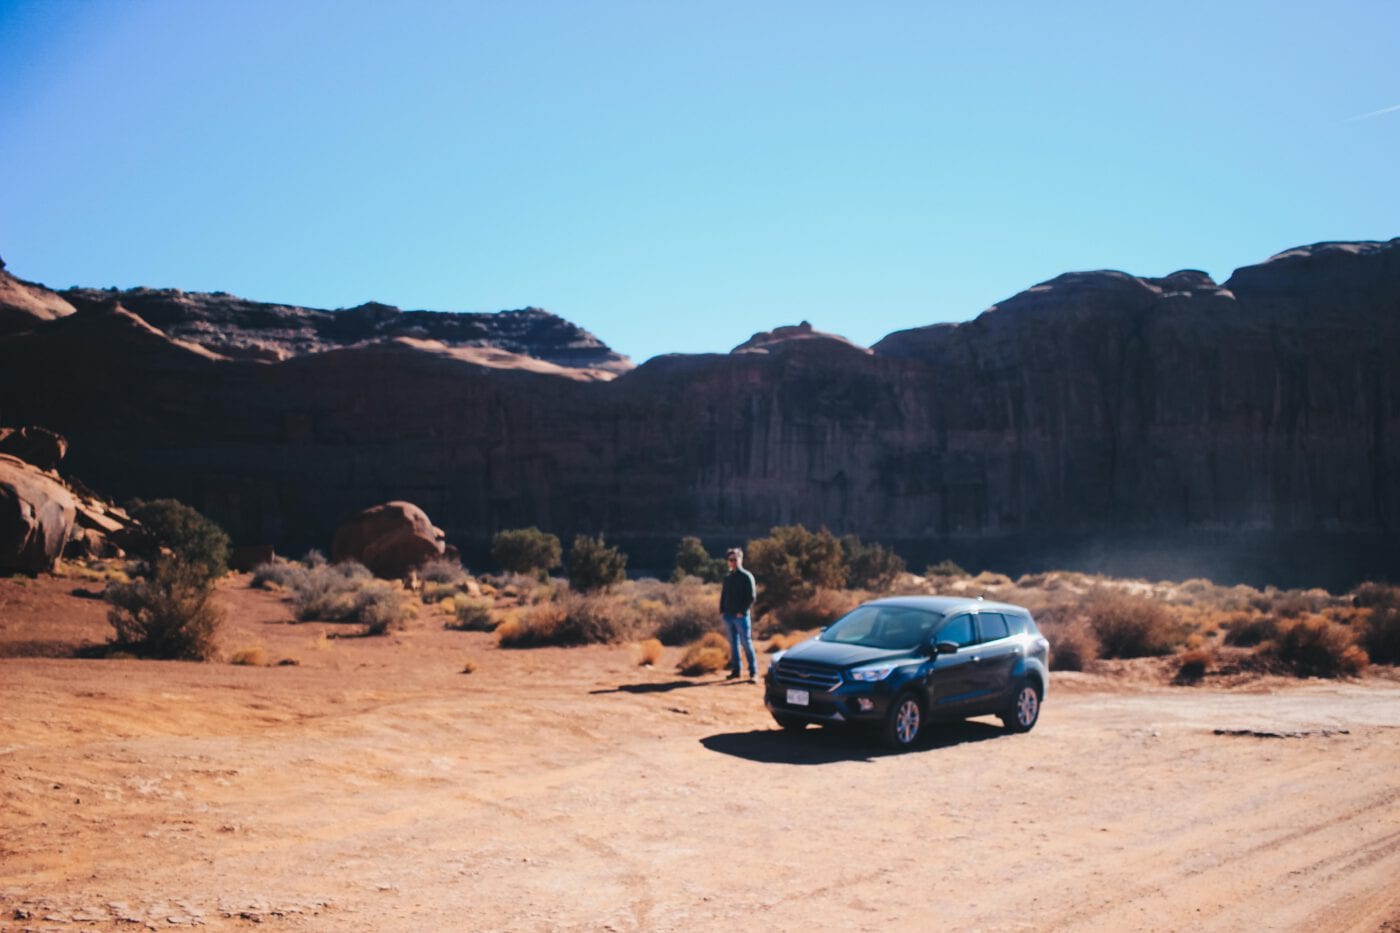 Monument Valley: Reisebericht & Tipps